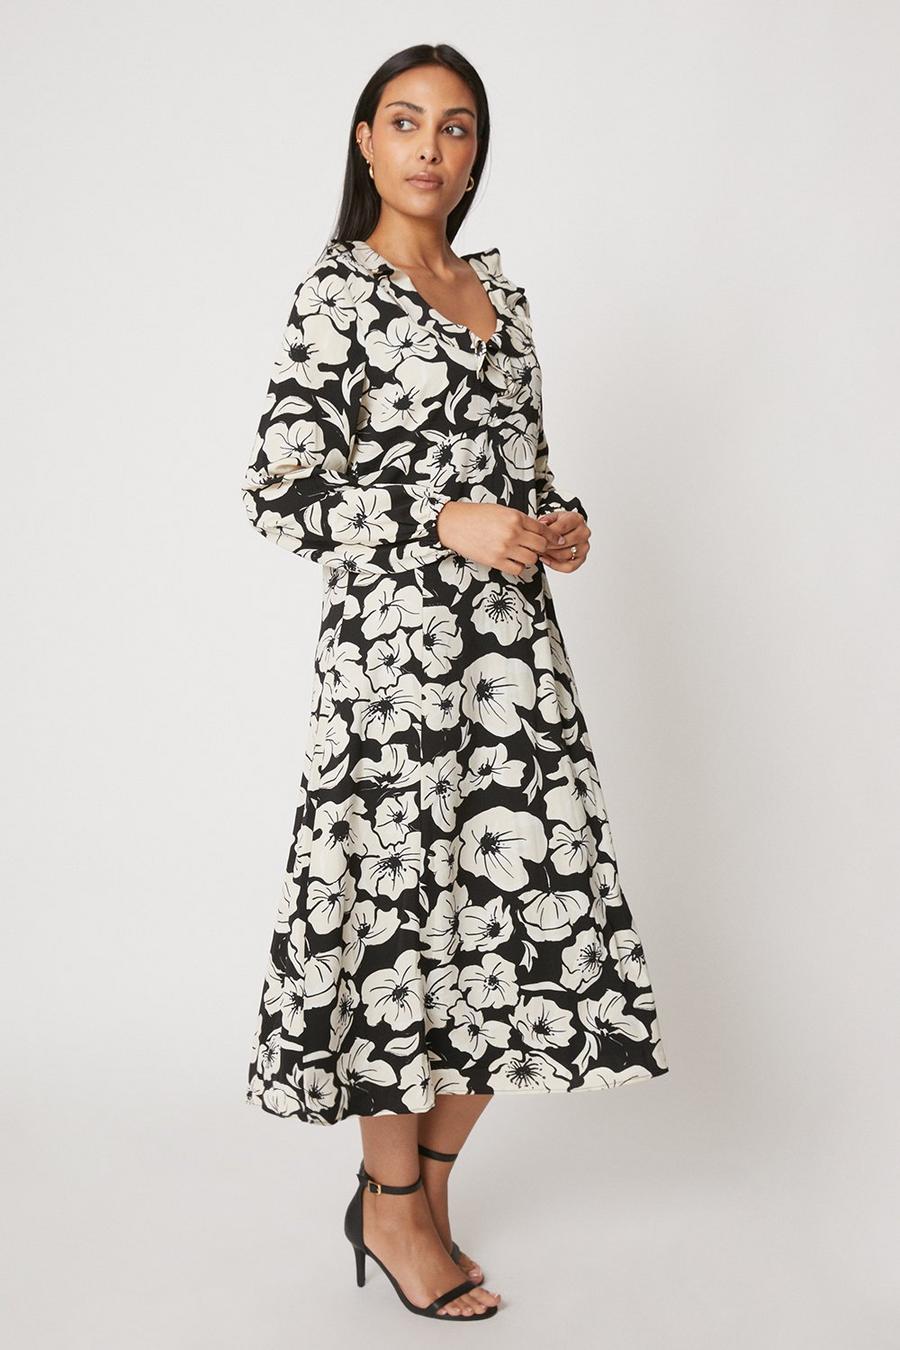 Petite Black Floral Ruffle Midi Dress